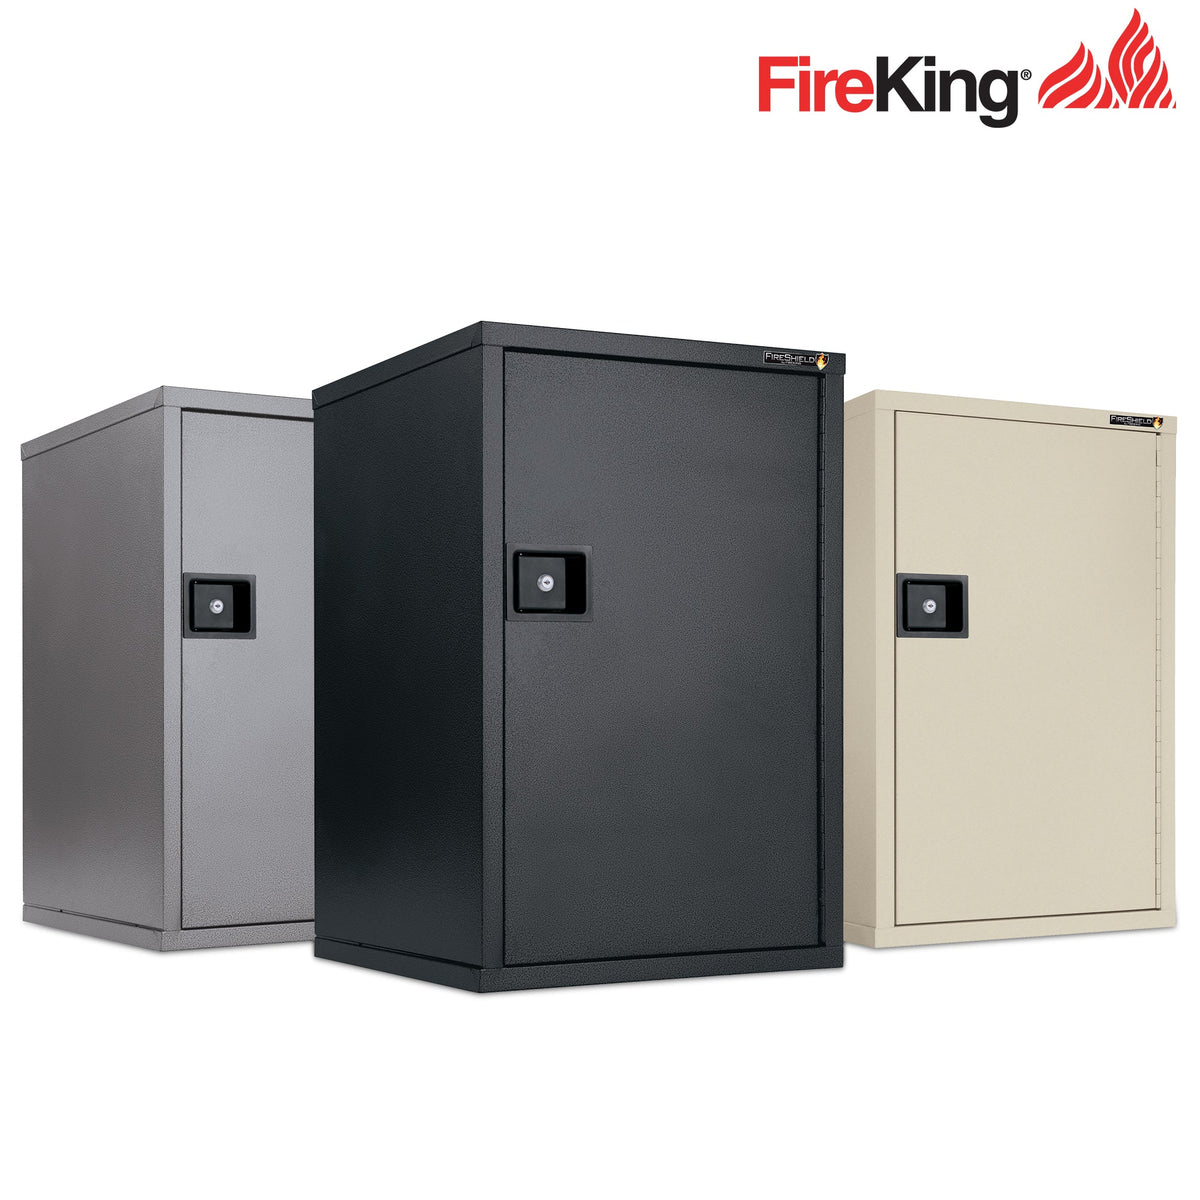 FireKing HSC-3422-D FireShield Storage Cabinet Main Image